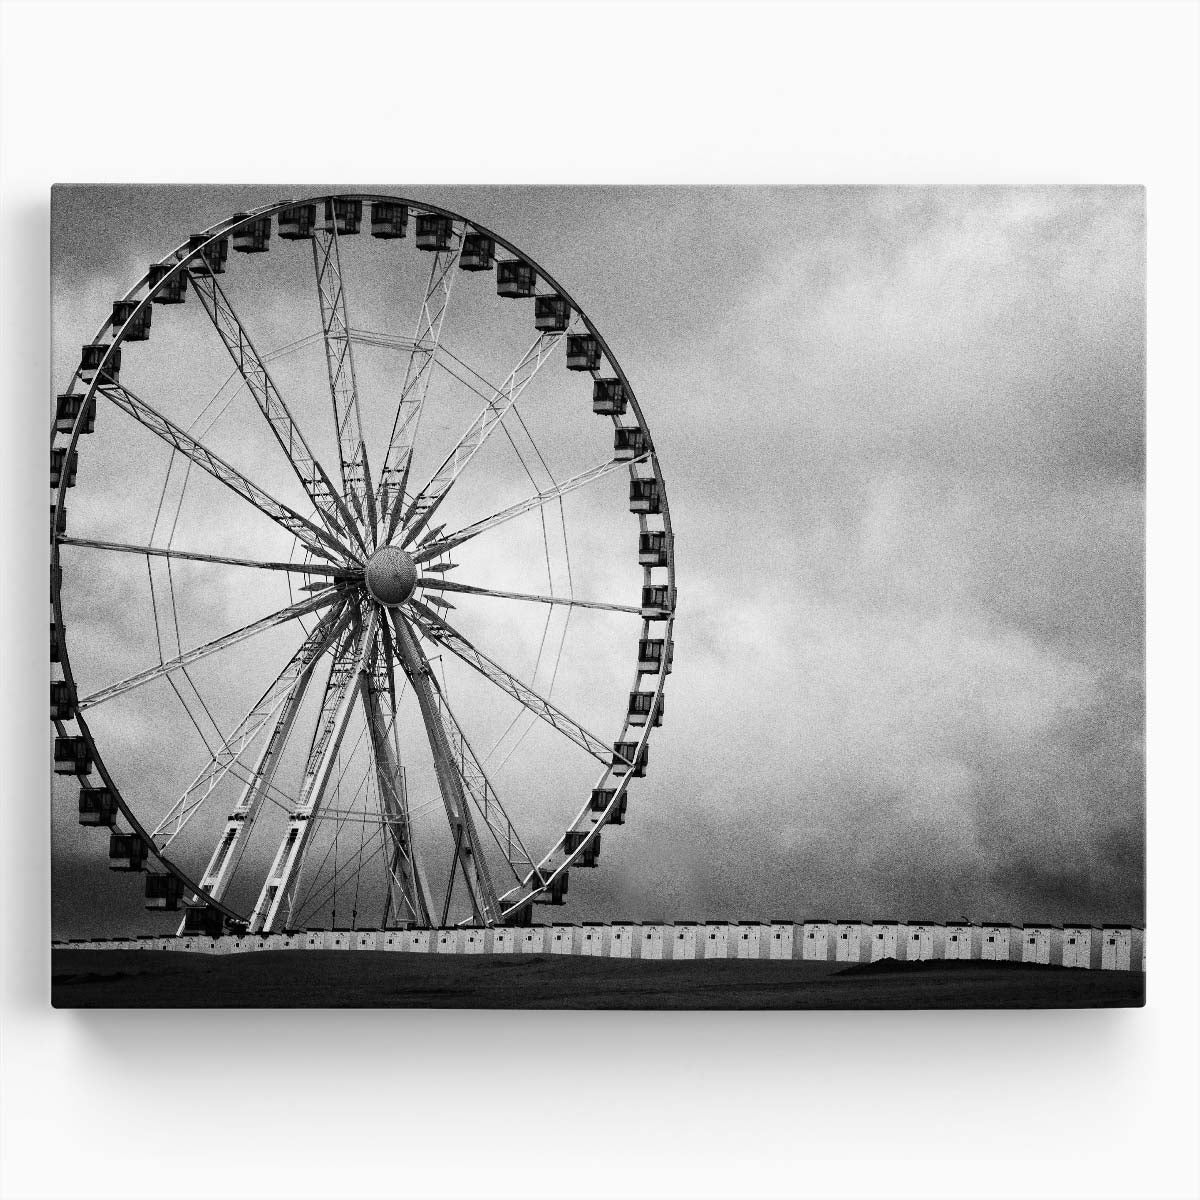 Monochrome Ferris Wheel Coastal Landscape Wall Art by Luxuriance Designs. Made in USA.